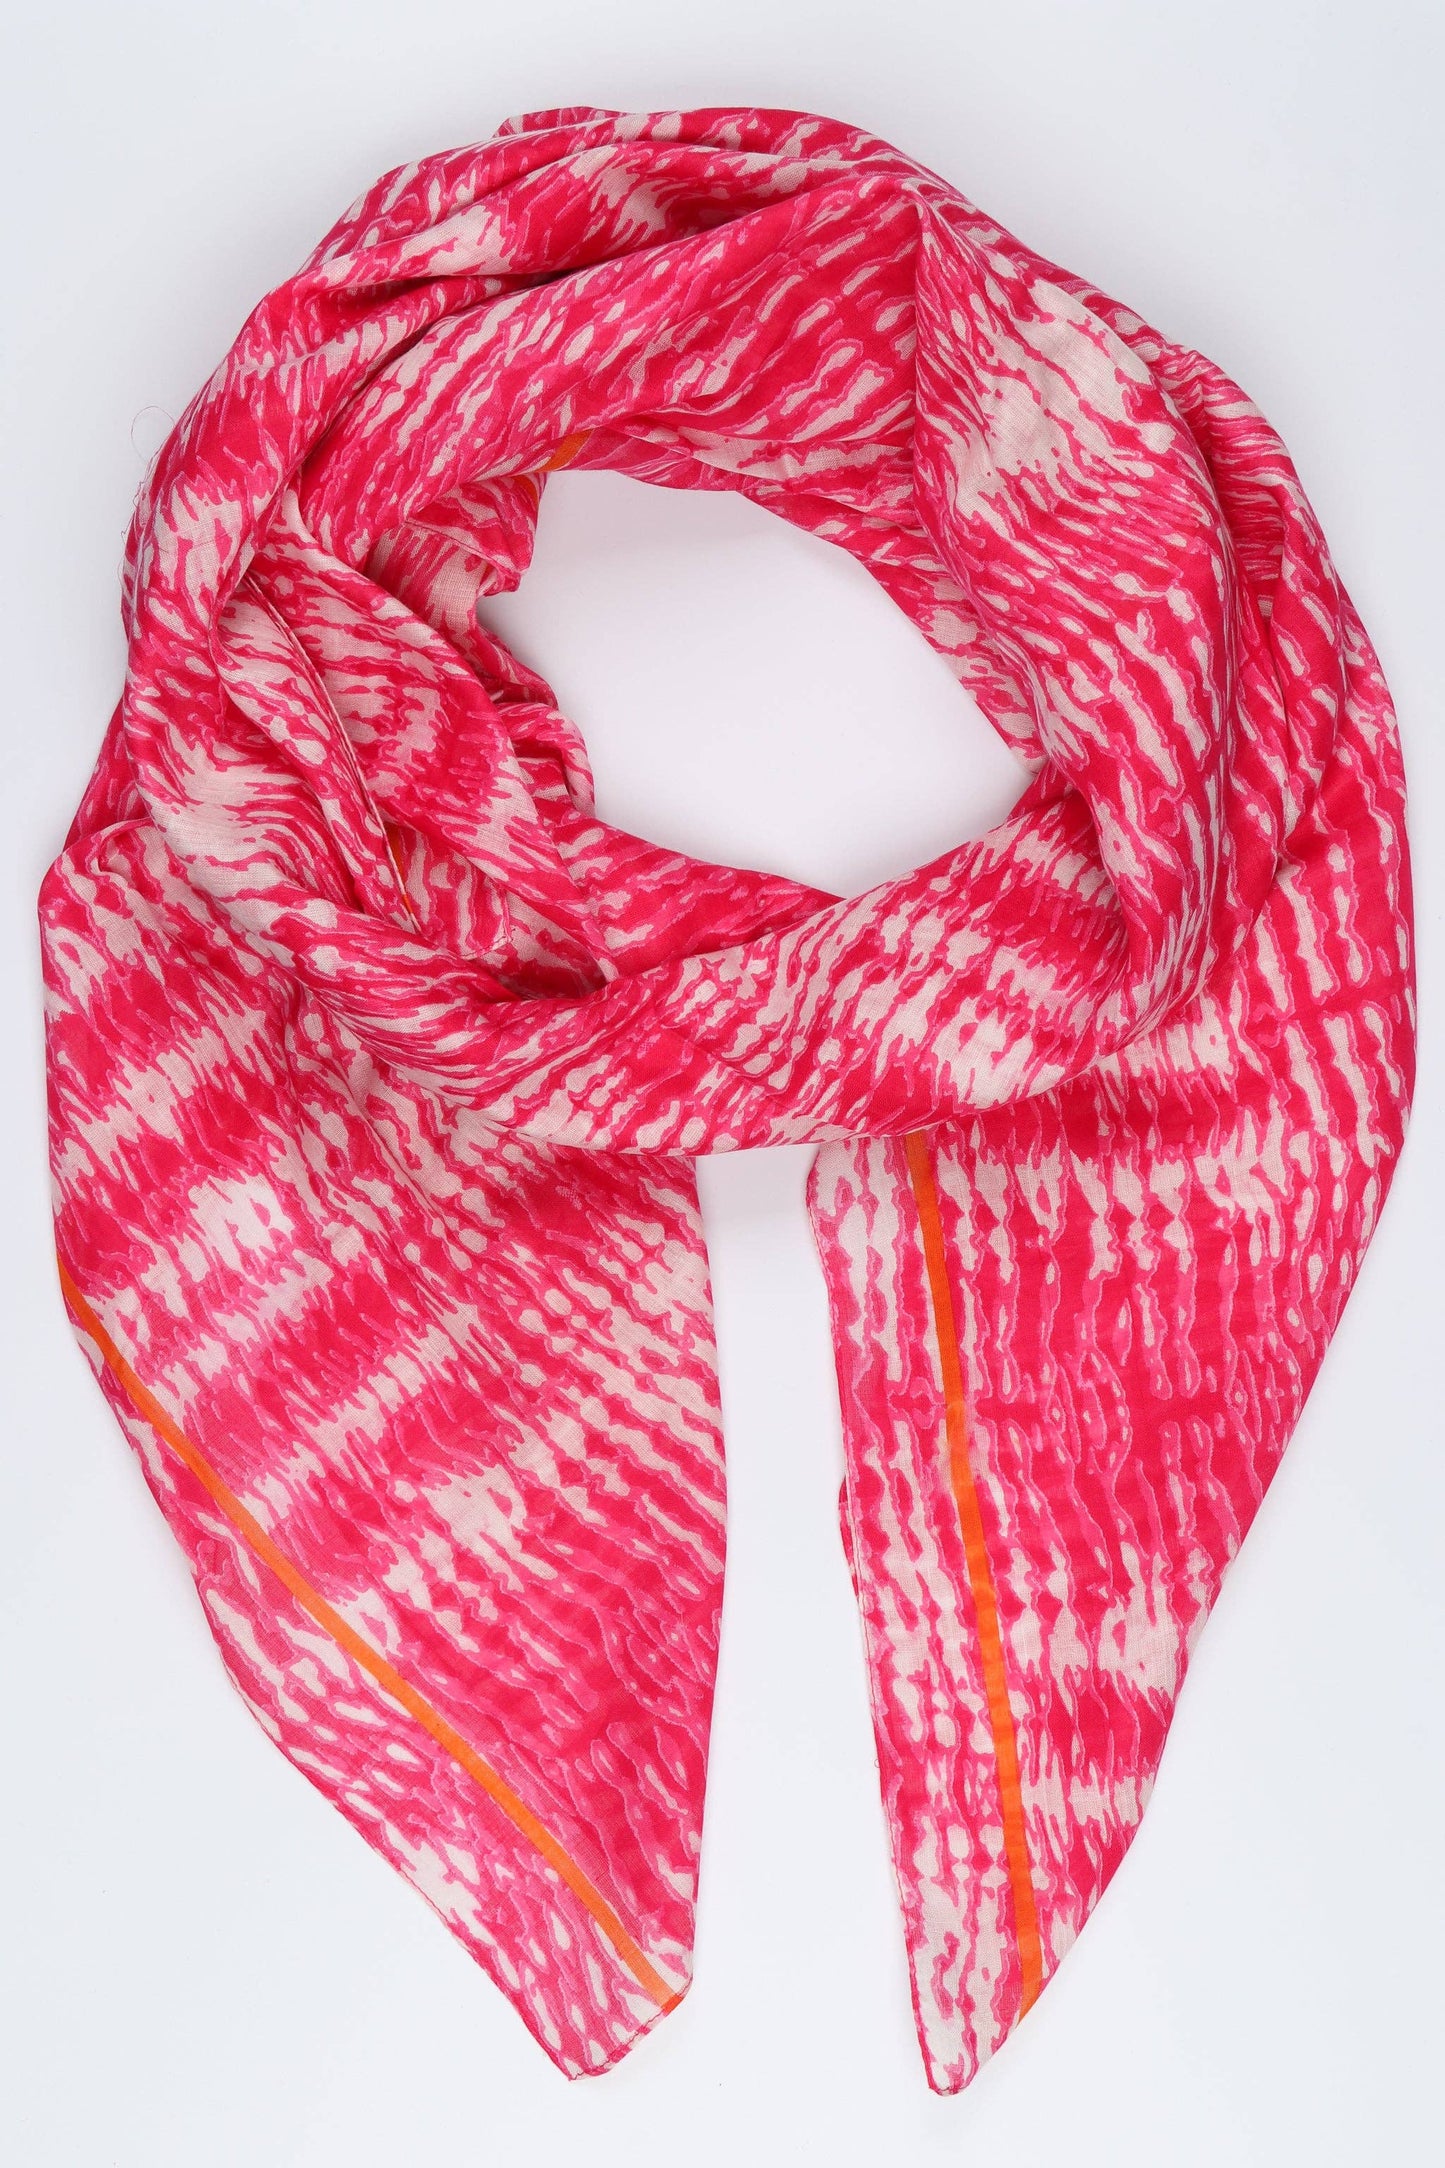 Neon Striped Edge Tie Dye Cotton Scarf in Hot Pink